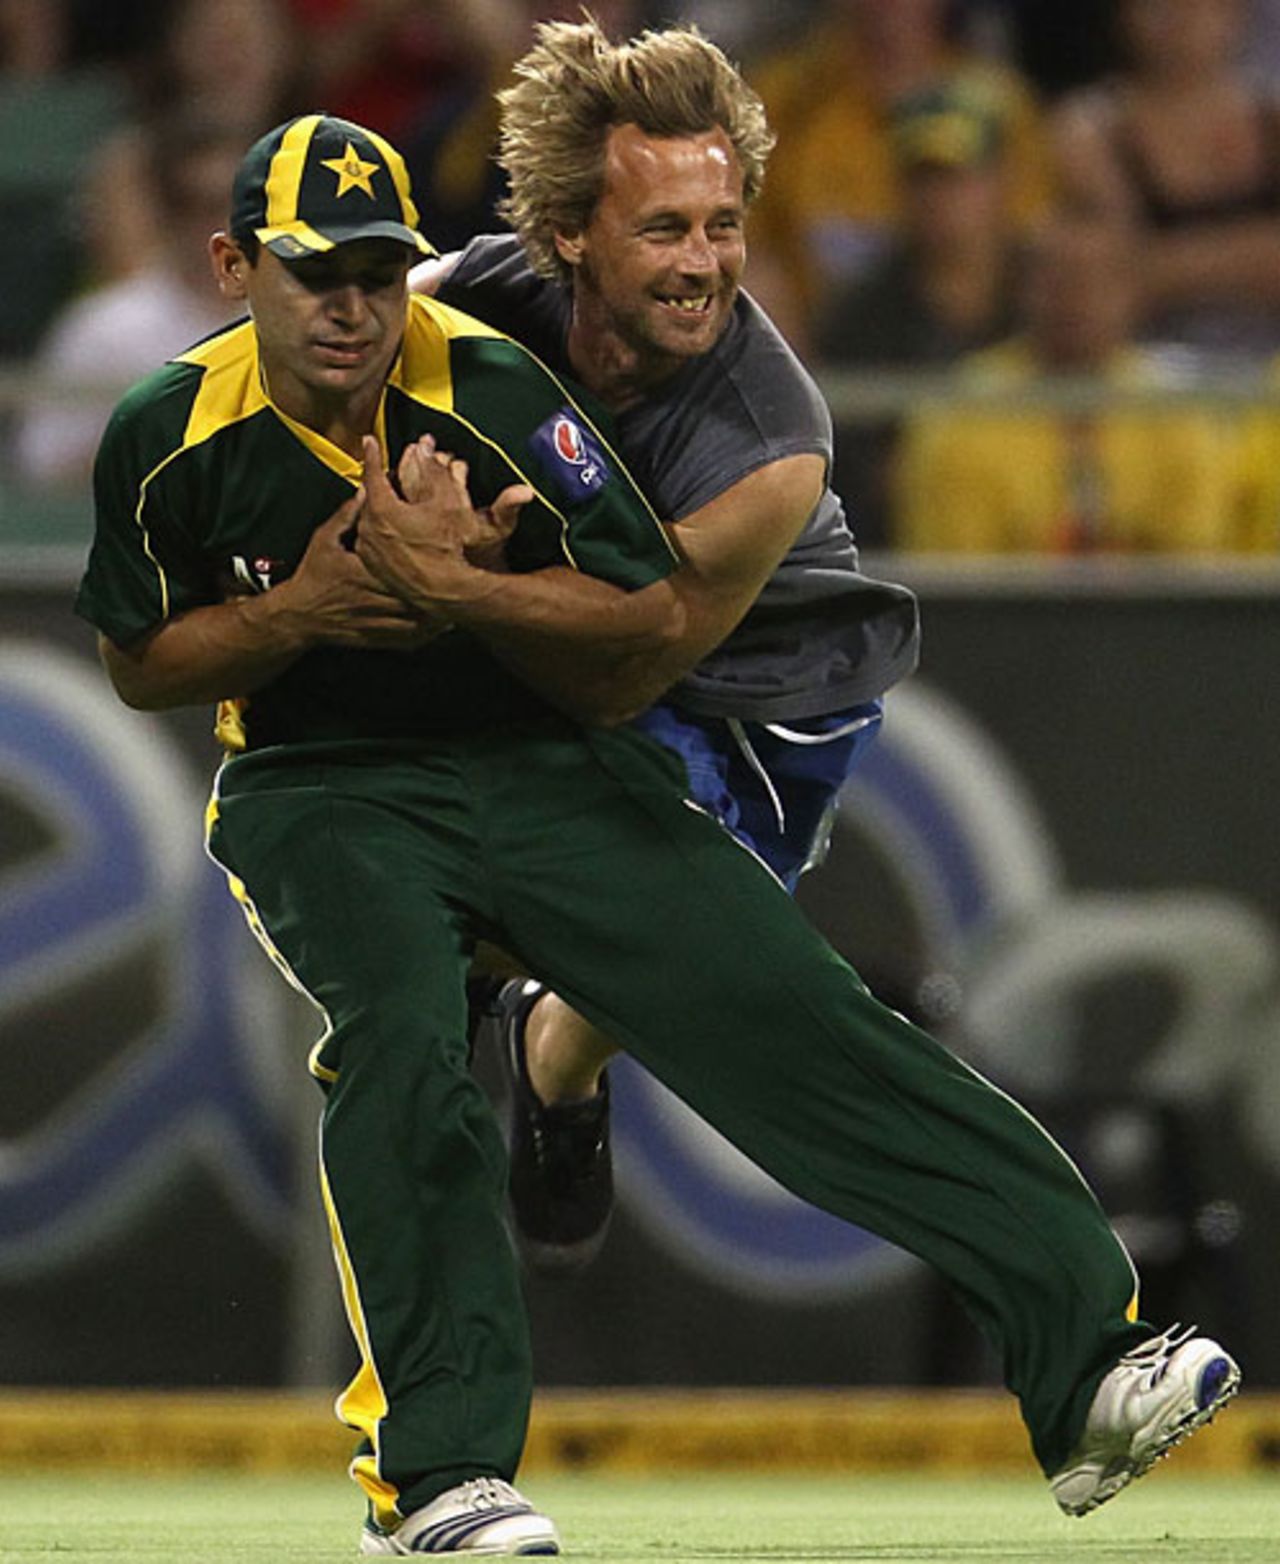 Khalid Latif is the chosen one as a spectator invades the pitch, Australia v Pakistan, 5th ODI, Perth, January 31, 2010